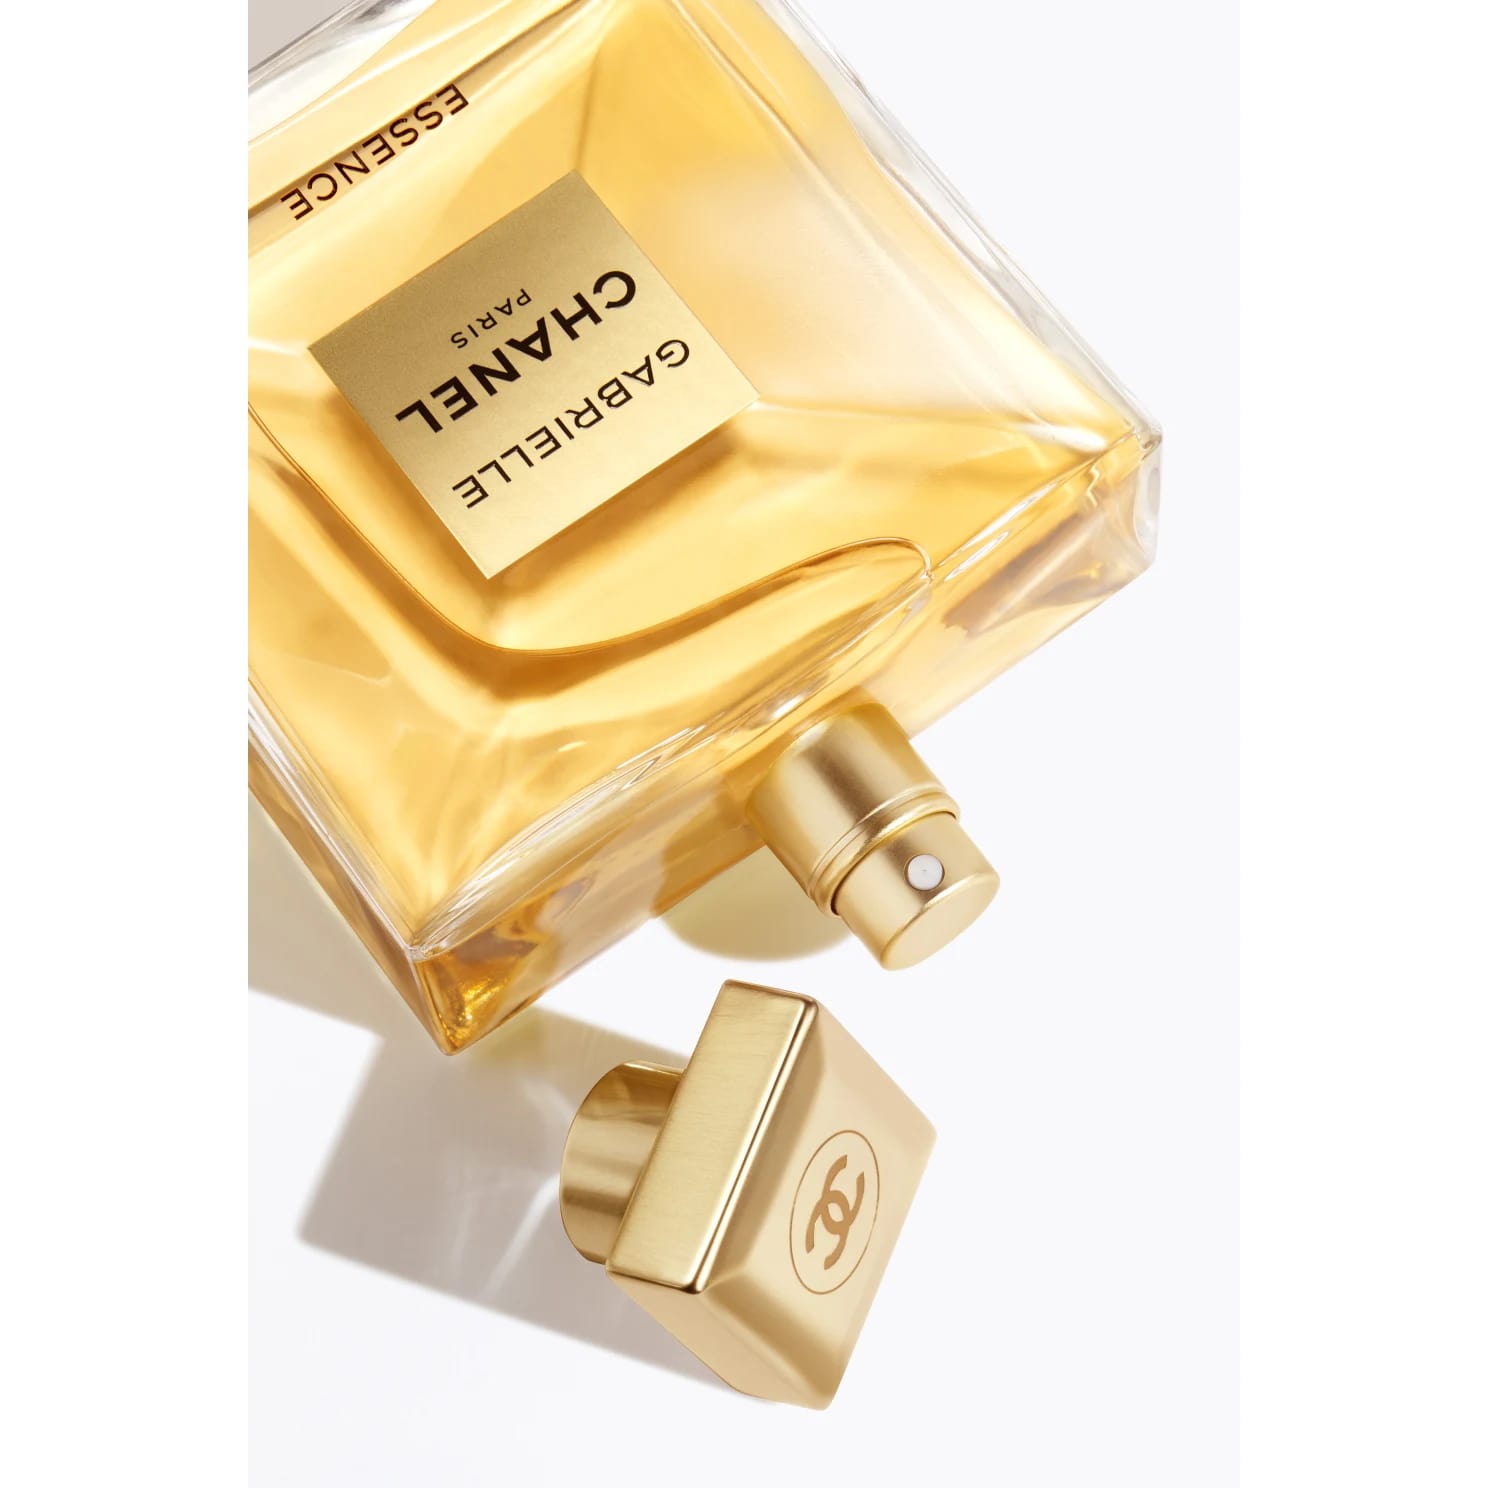 Gabrielle Essence EDP Spray Perfume by Chanel